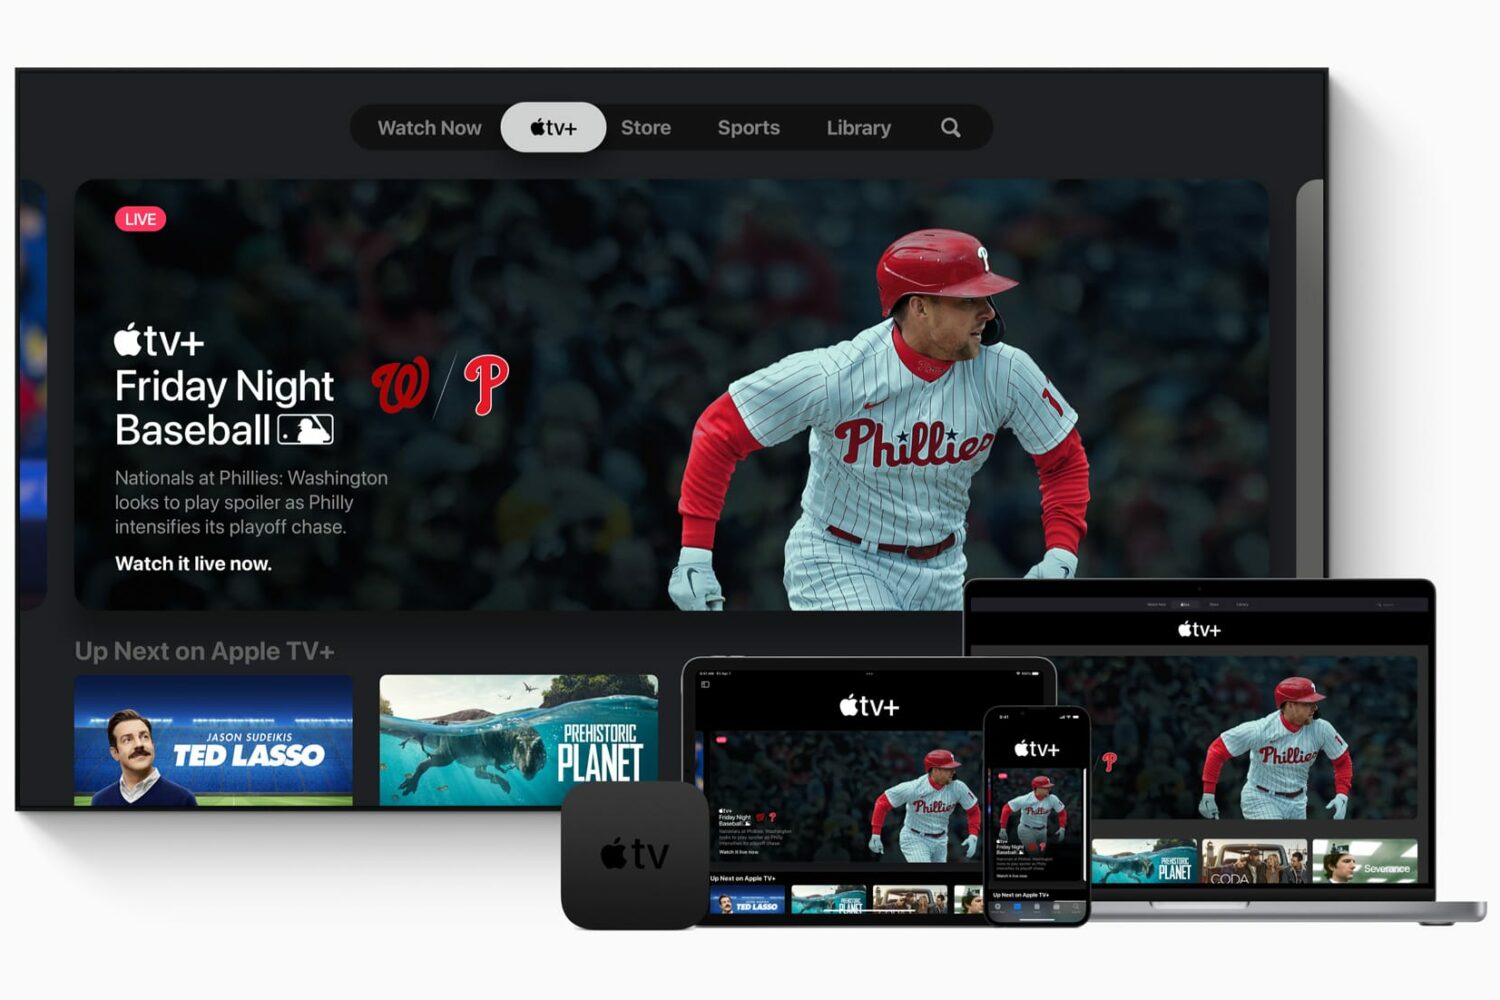 Marketing image showcasing Friday Night Baseball on Apple TV+ across iPhone, iPad and Apple TV